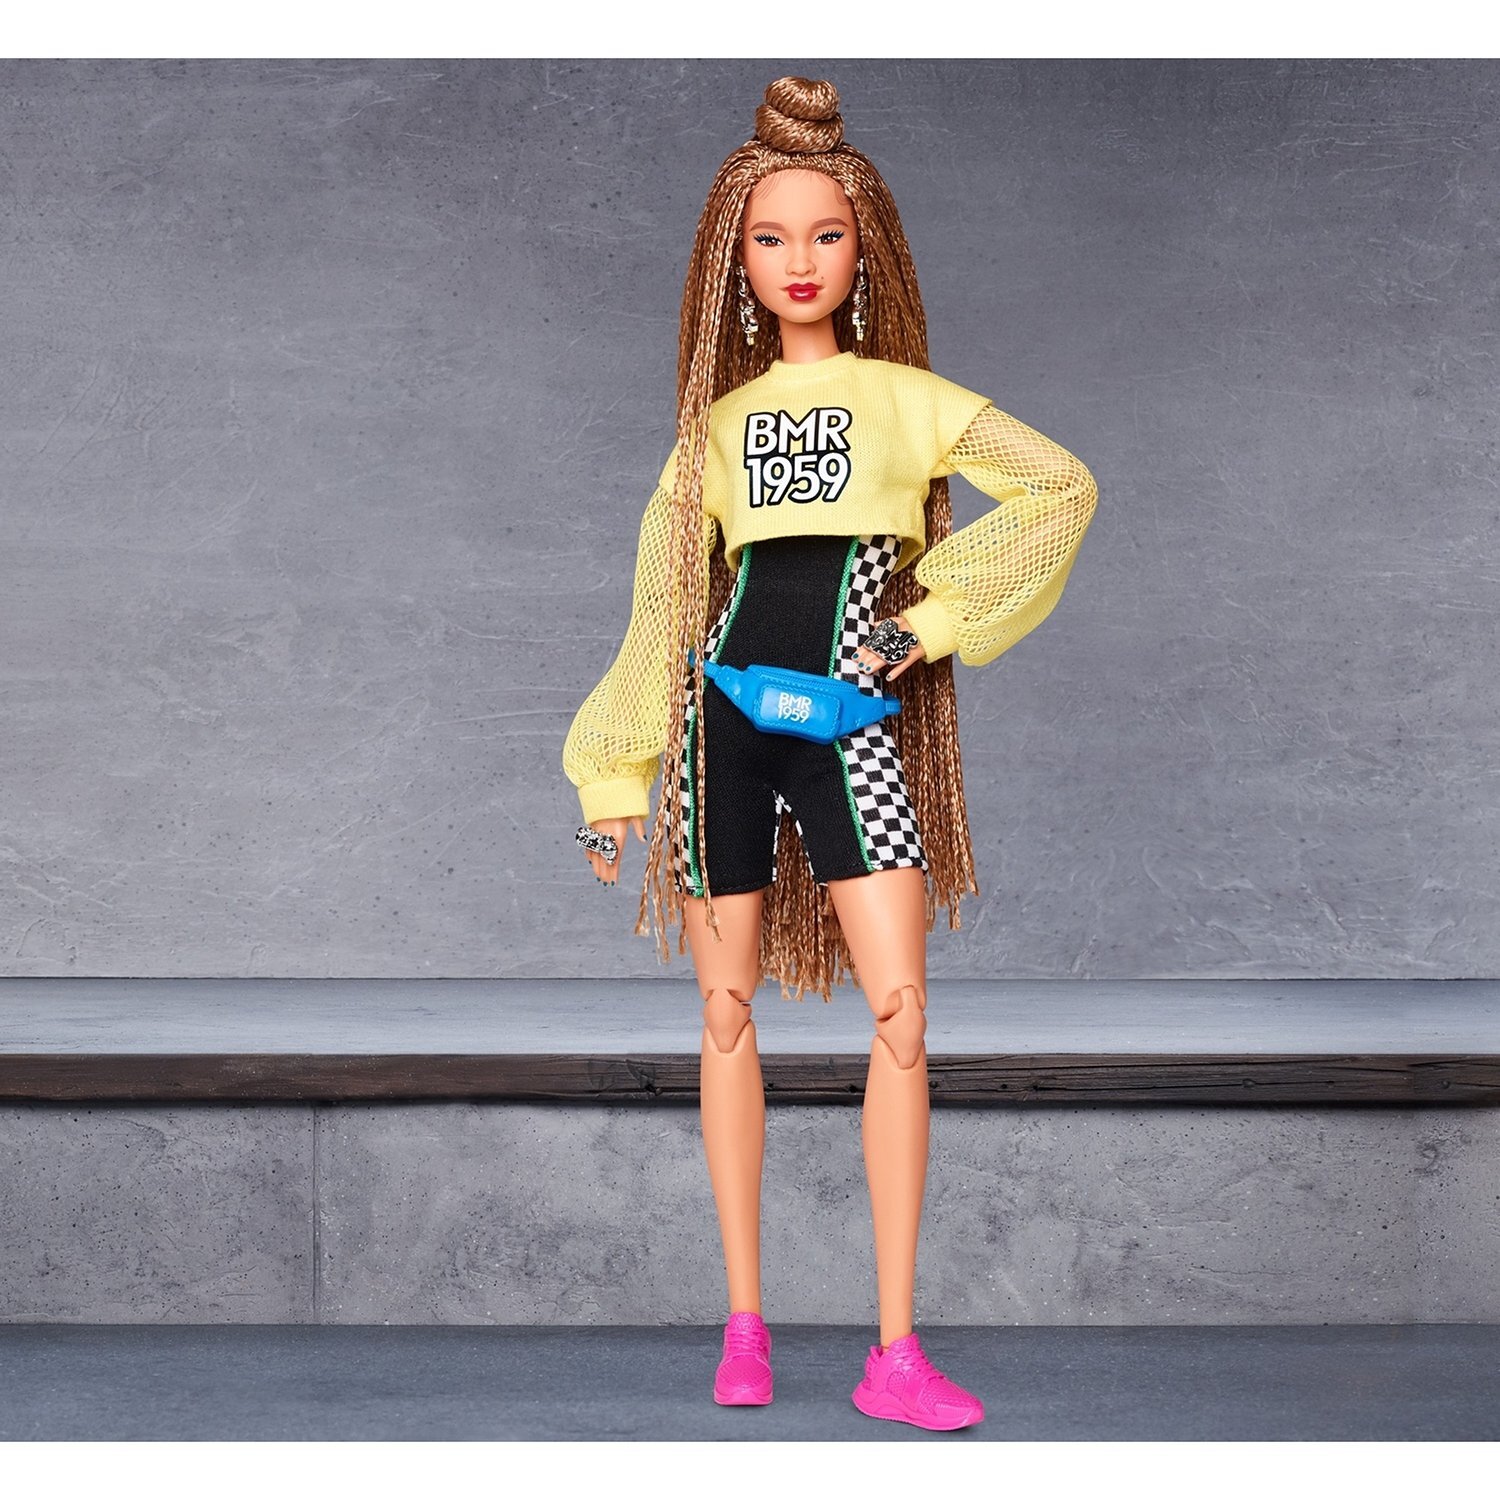 Куклы популярные сейчас. Кукла Барби BMR 1959. Кукла Barbie коллекционная bmr1959. Кукла Барби bmr1959 Латиноамериканка. Кукла Барби bmr1959 ght91.